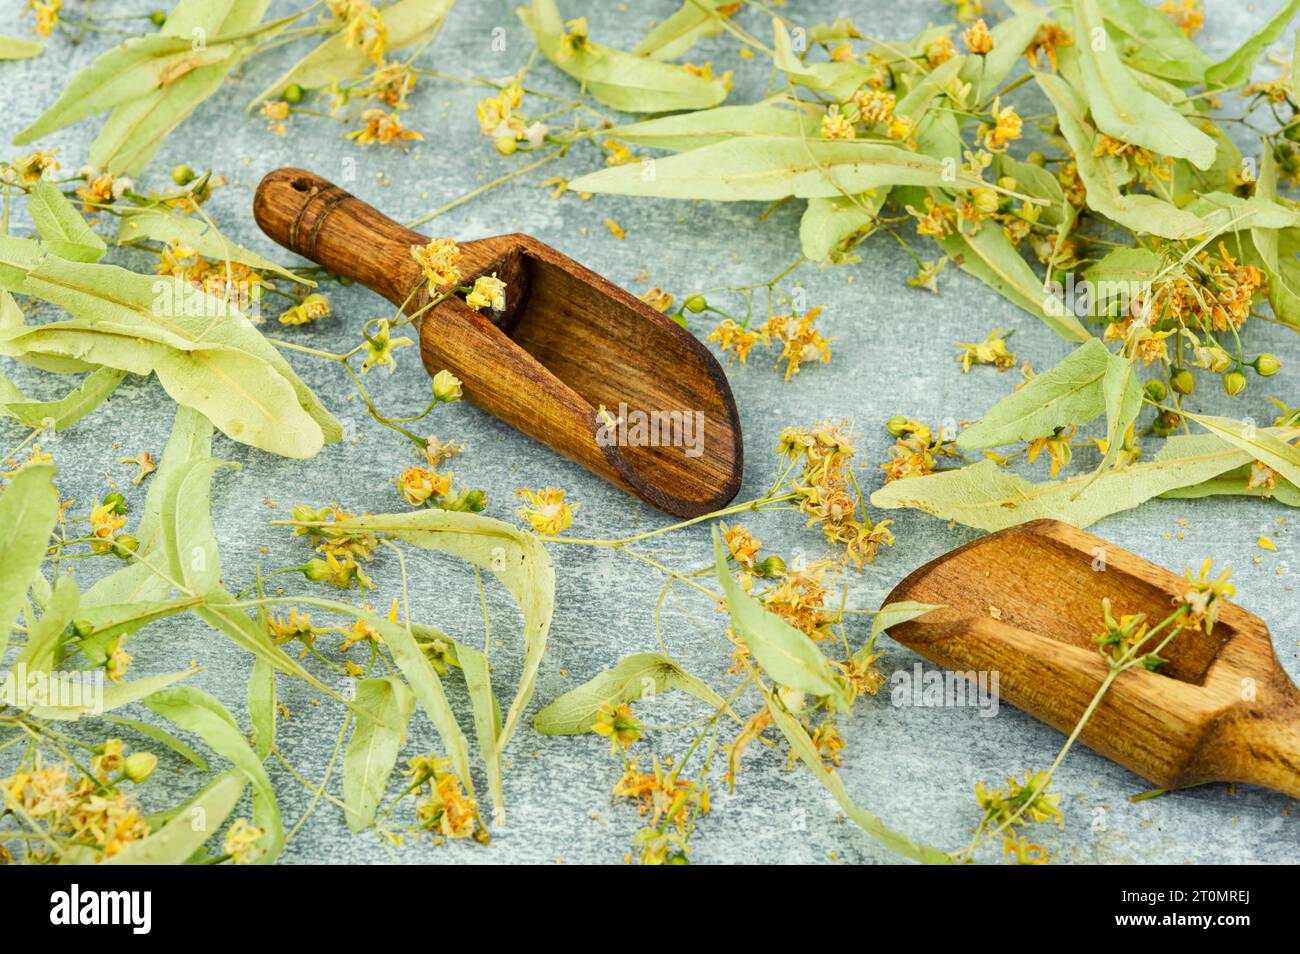 Healing inflorescences of linden, herbal medicine, medicinal plants.Homeopathy Stock Photo